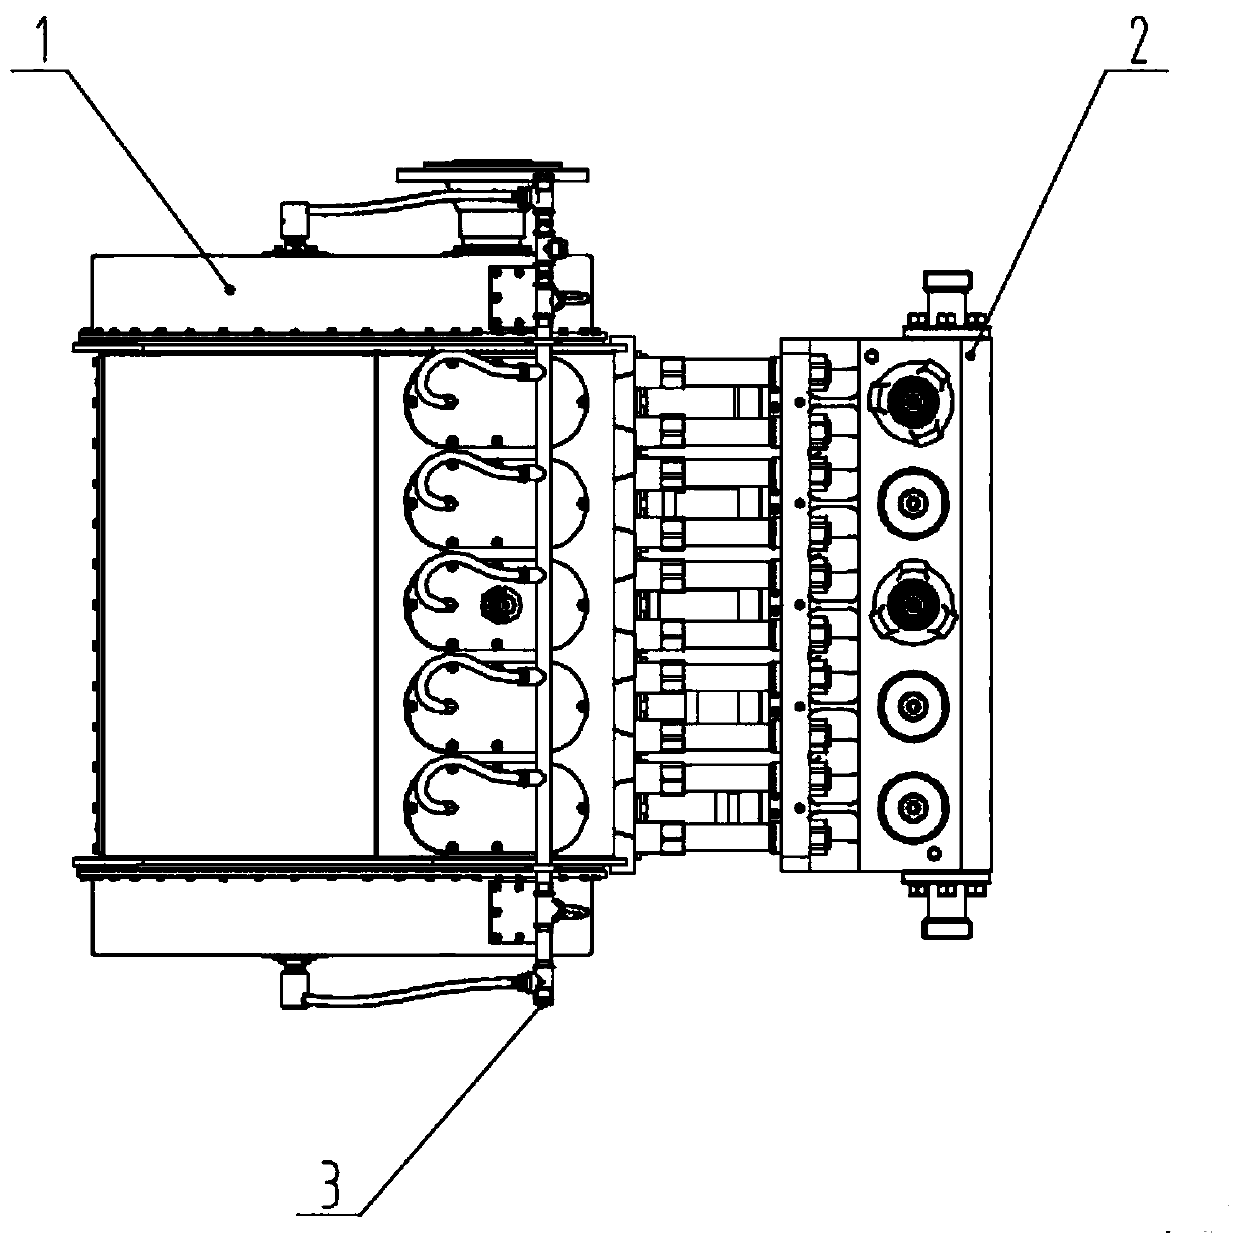 Light five-cylinder plunger pump